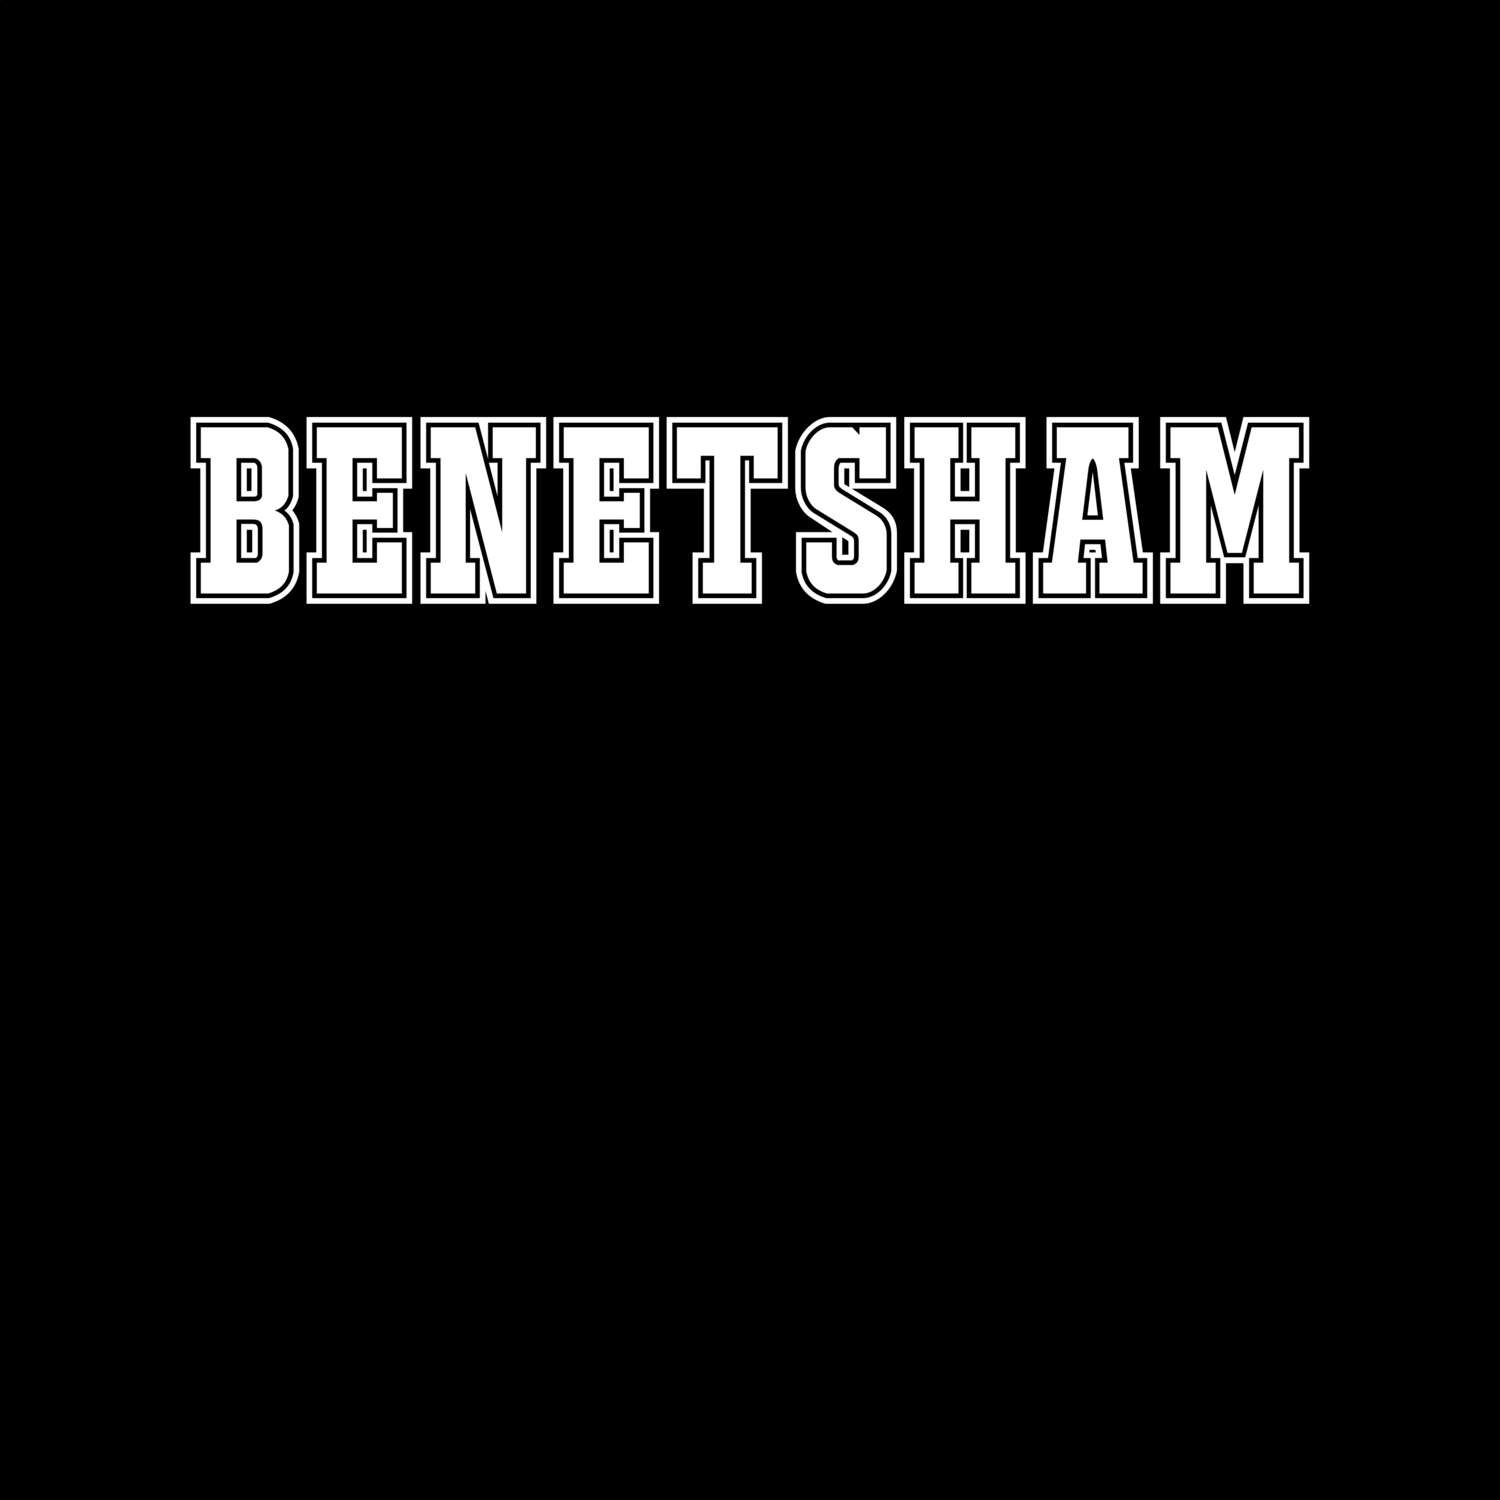 Benetsham T-Shirt »Classic«